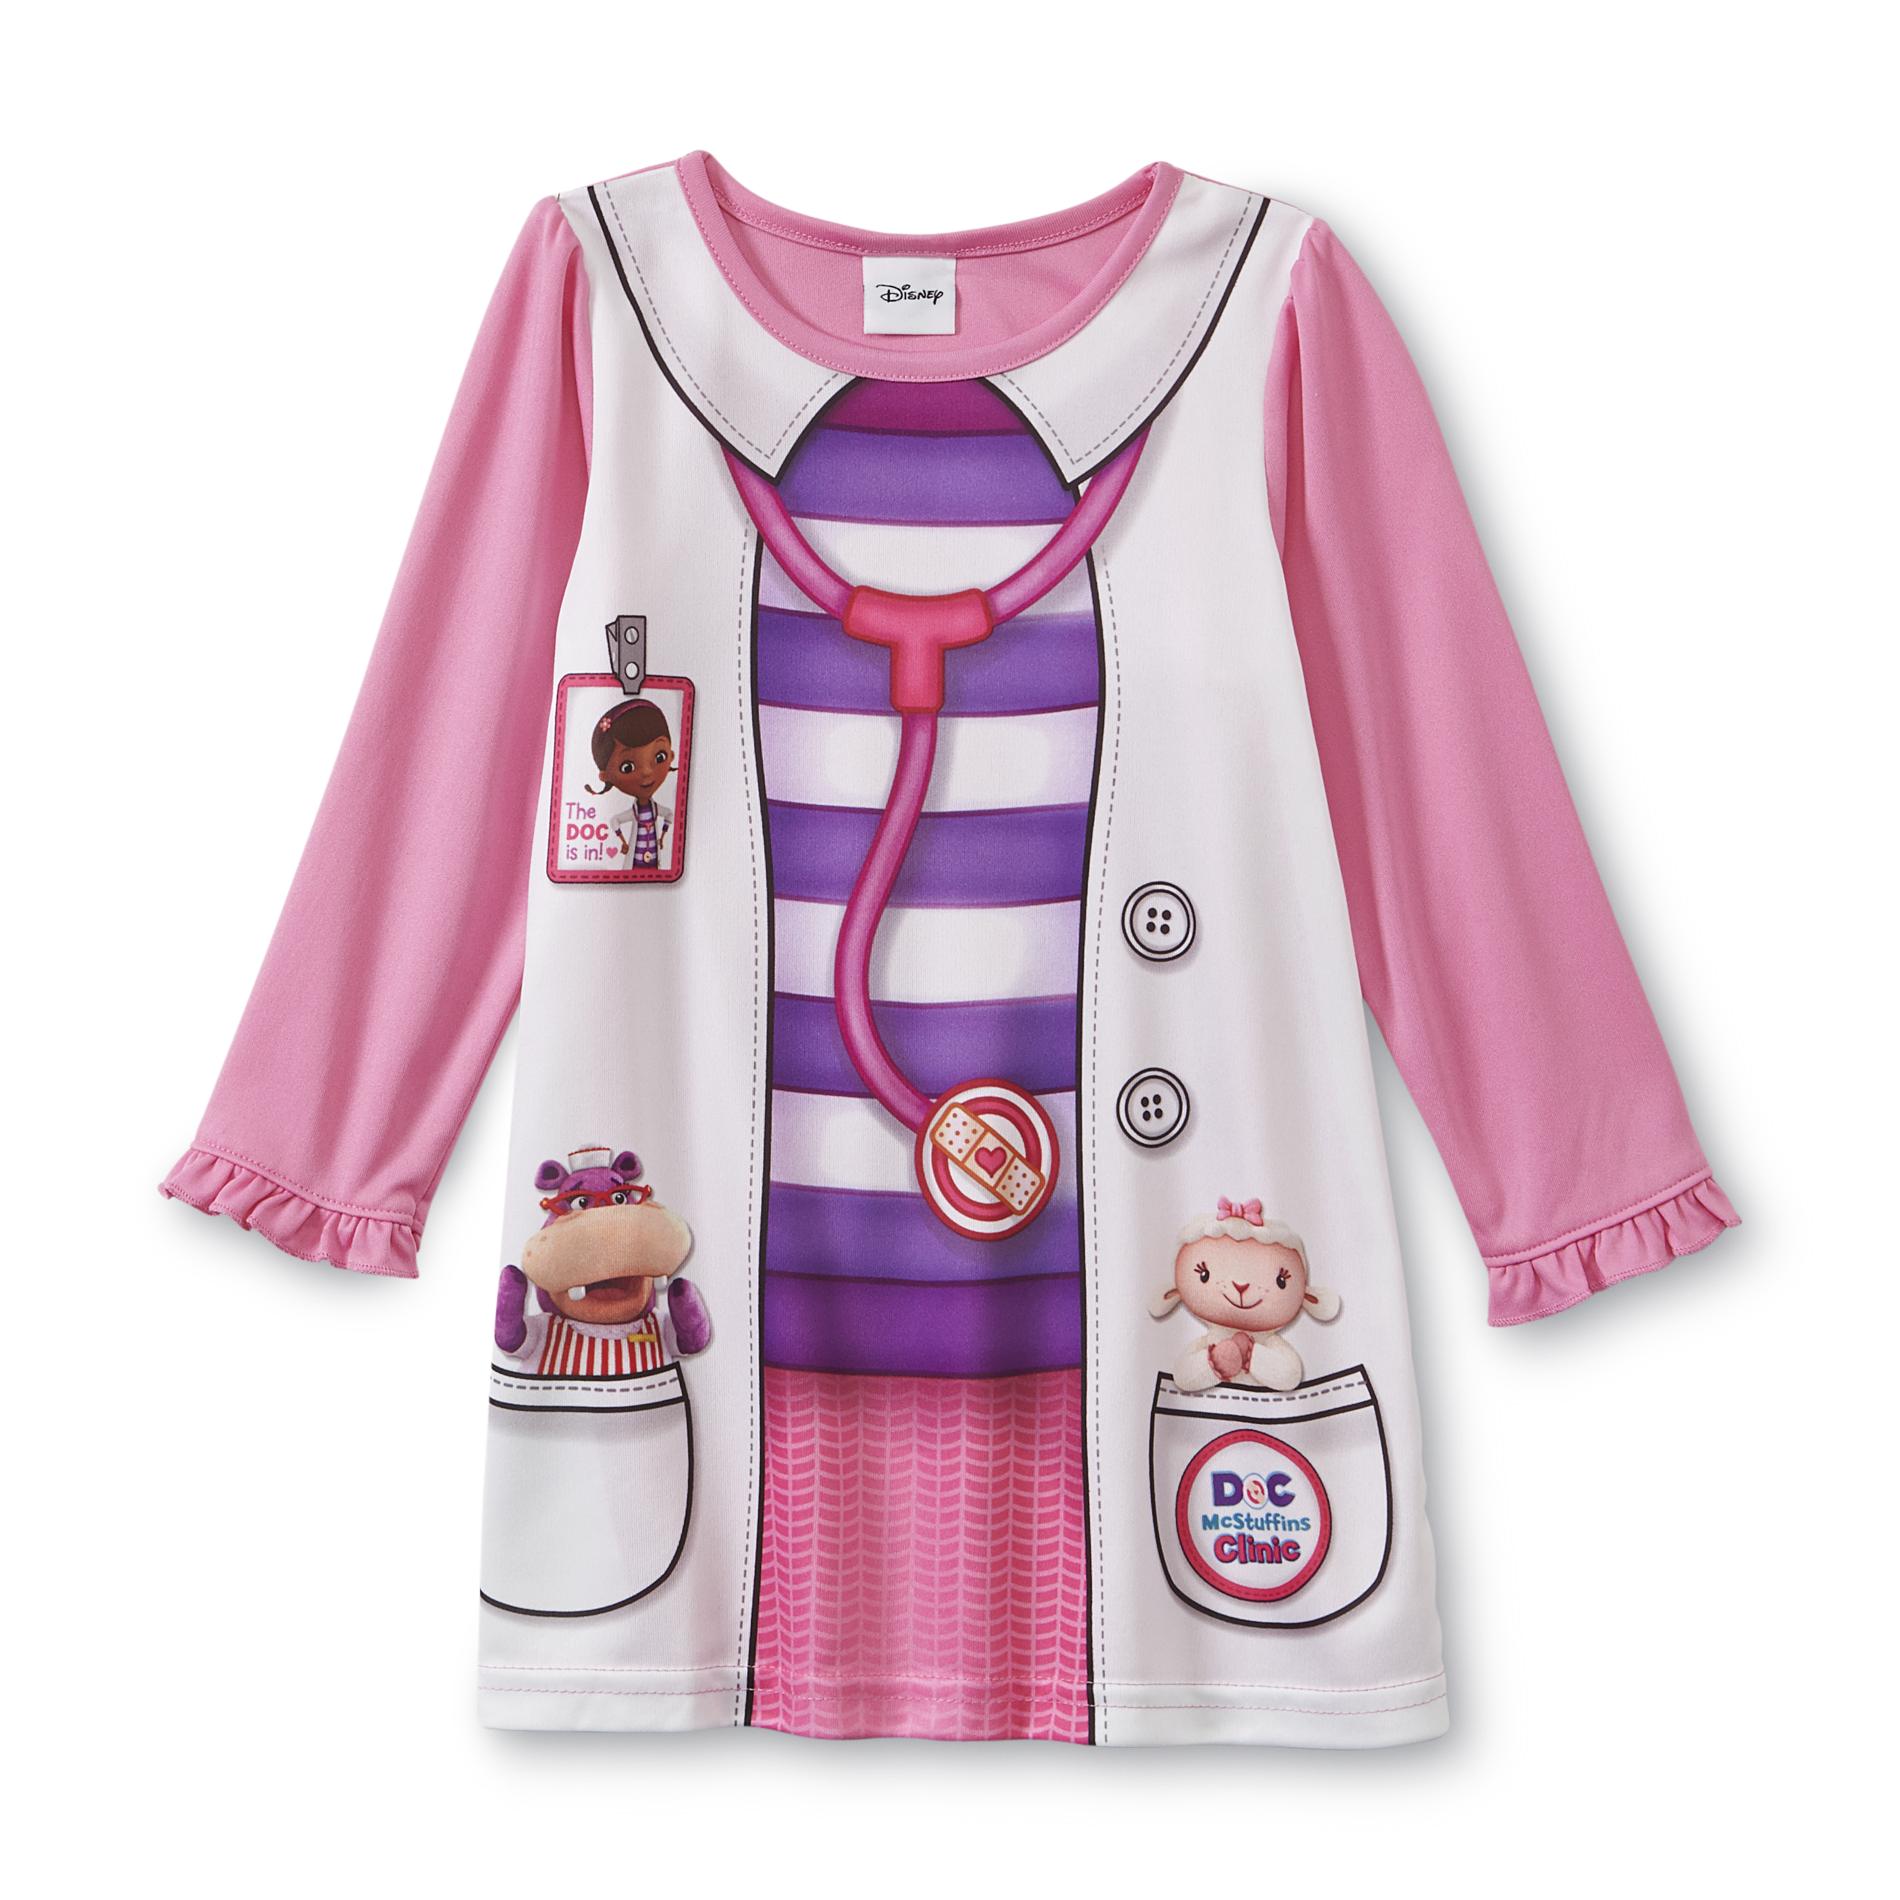 Disney Doc McStuffins Toddler Girl's Nightgown - Lab Coat